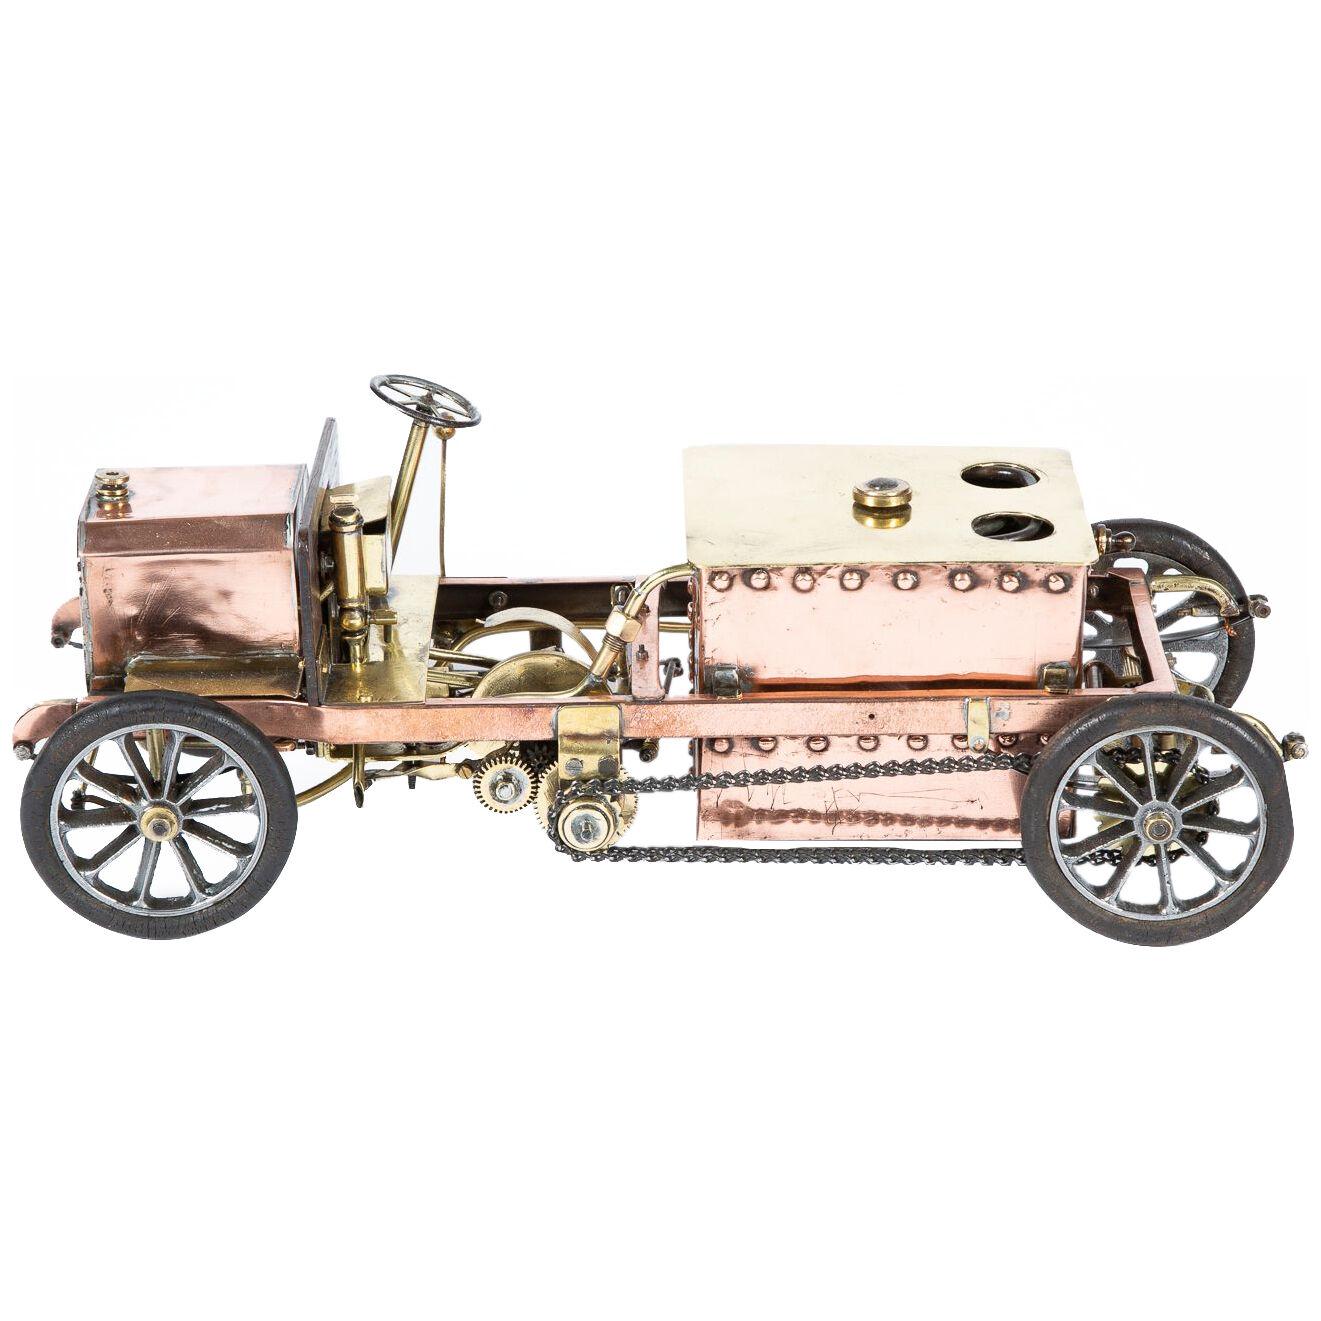 Miniature spirit fired steam car built in 1909